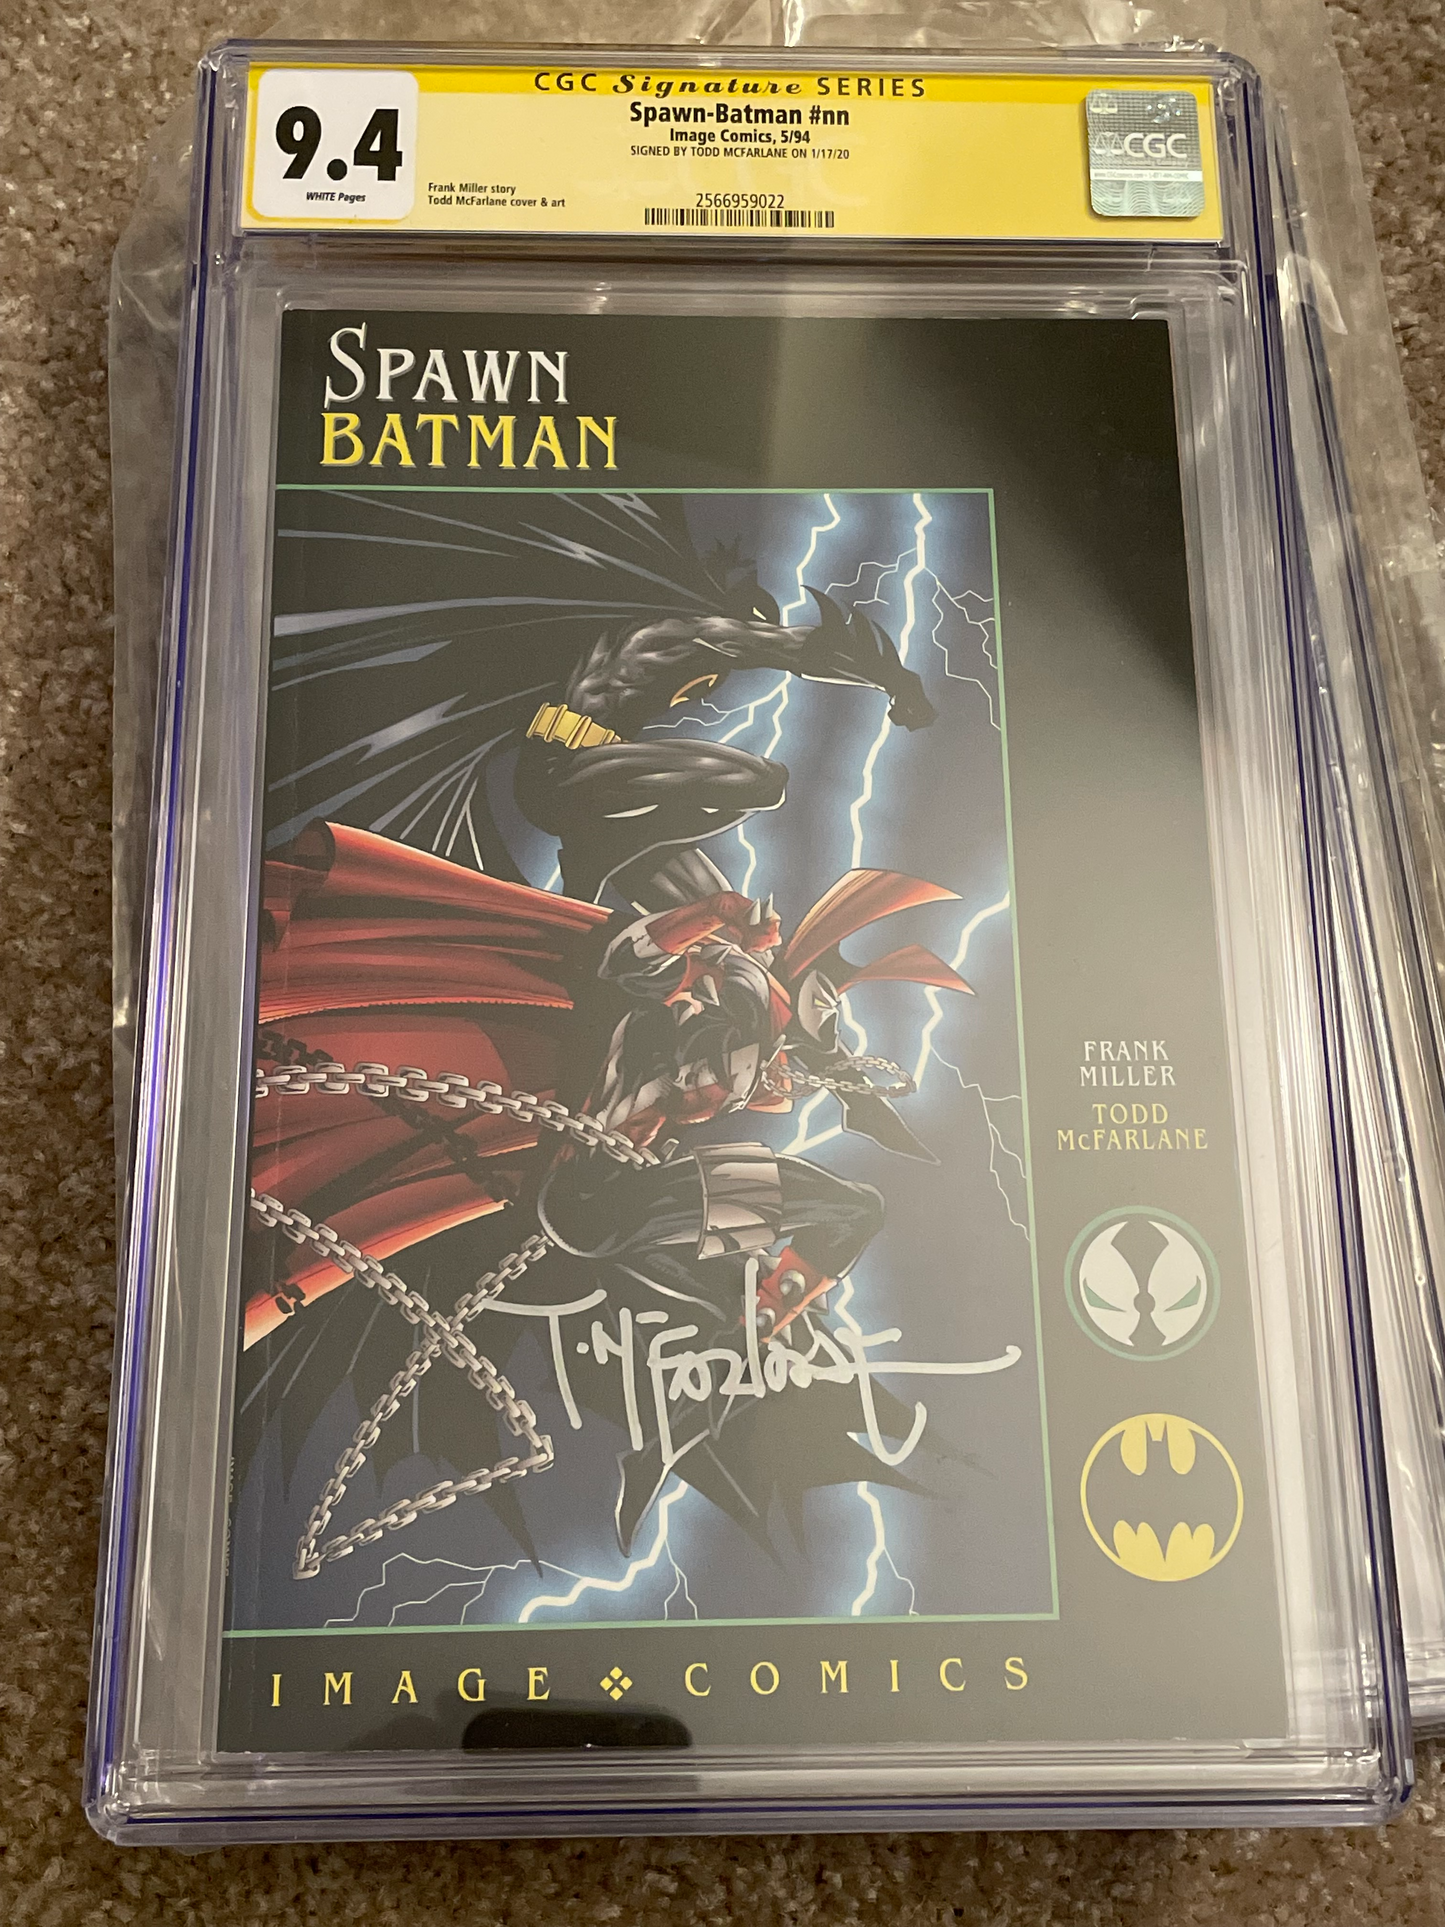 Spawn-Batman #nn CGC SS 9.4 Signed by Todd McFarlane